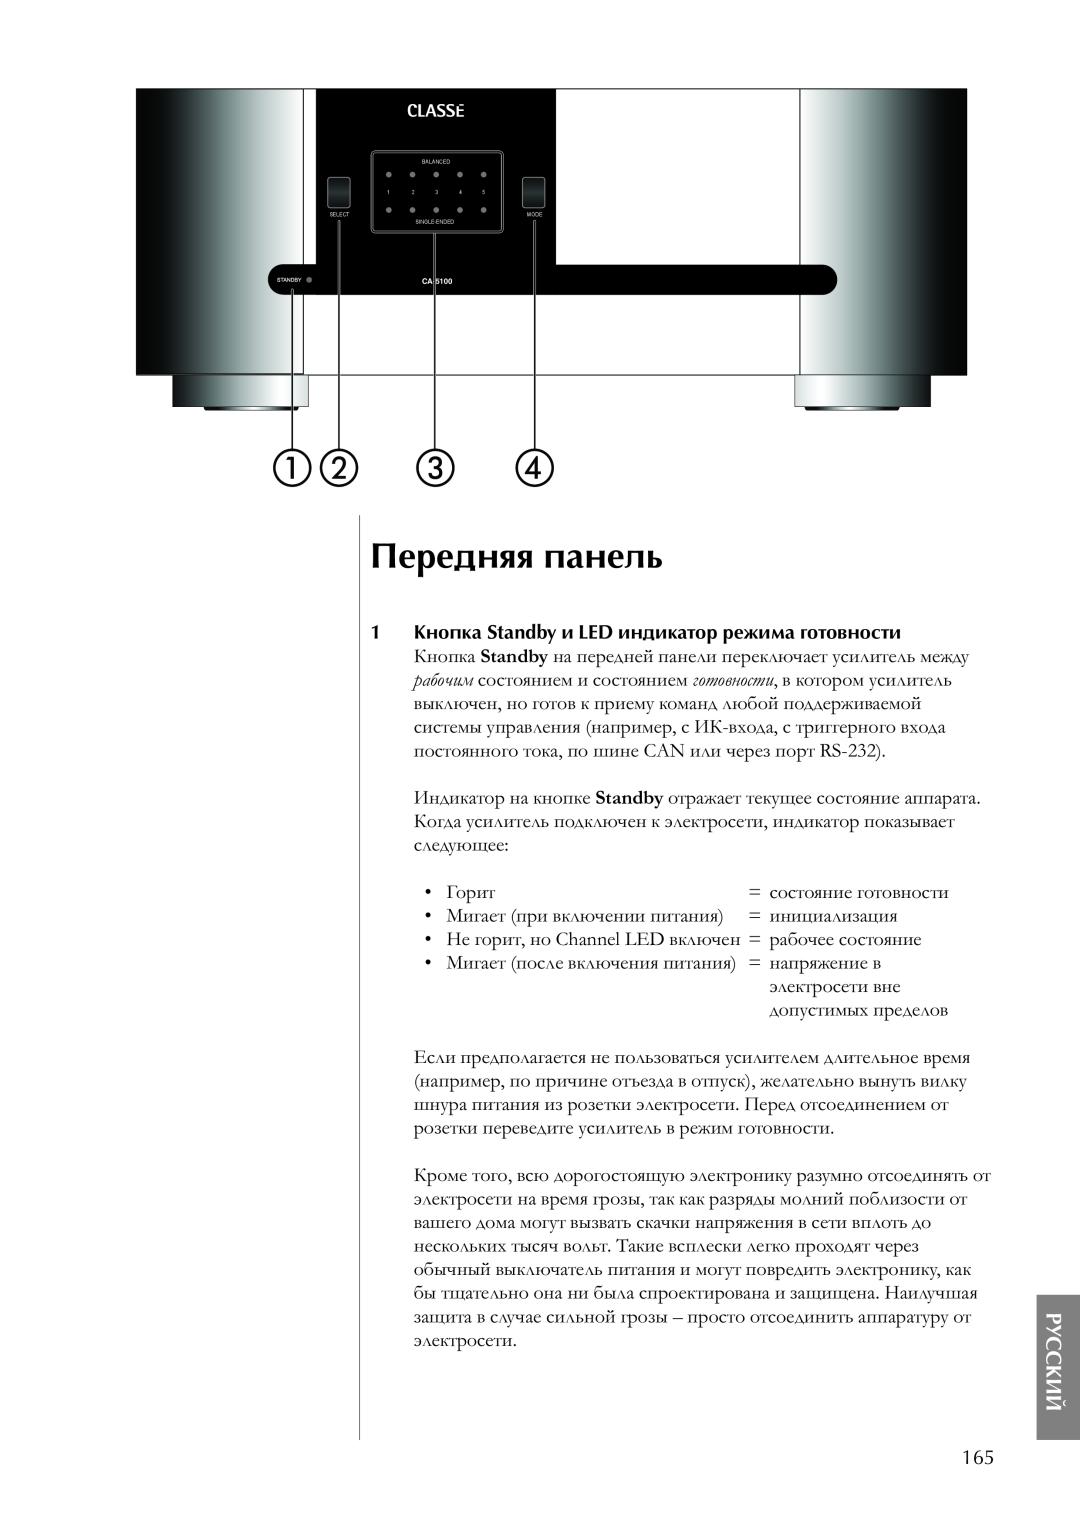 Classe Audio CA-5100 owner manual Передняя панель, Русский, Горит, инициализация 